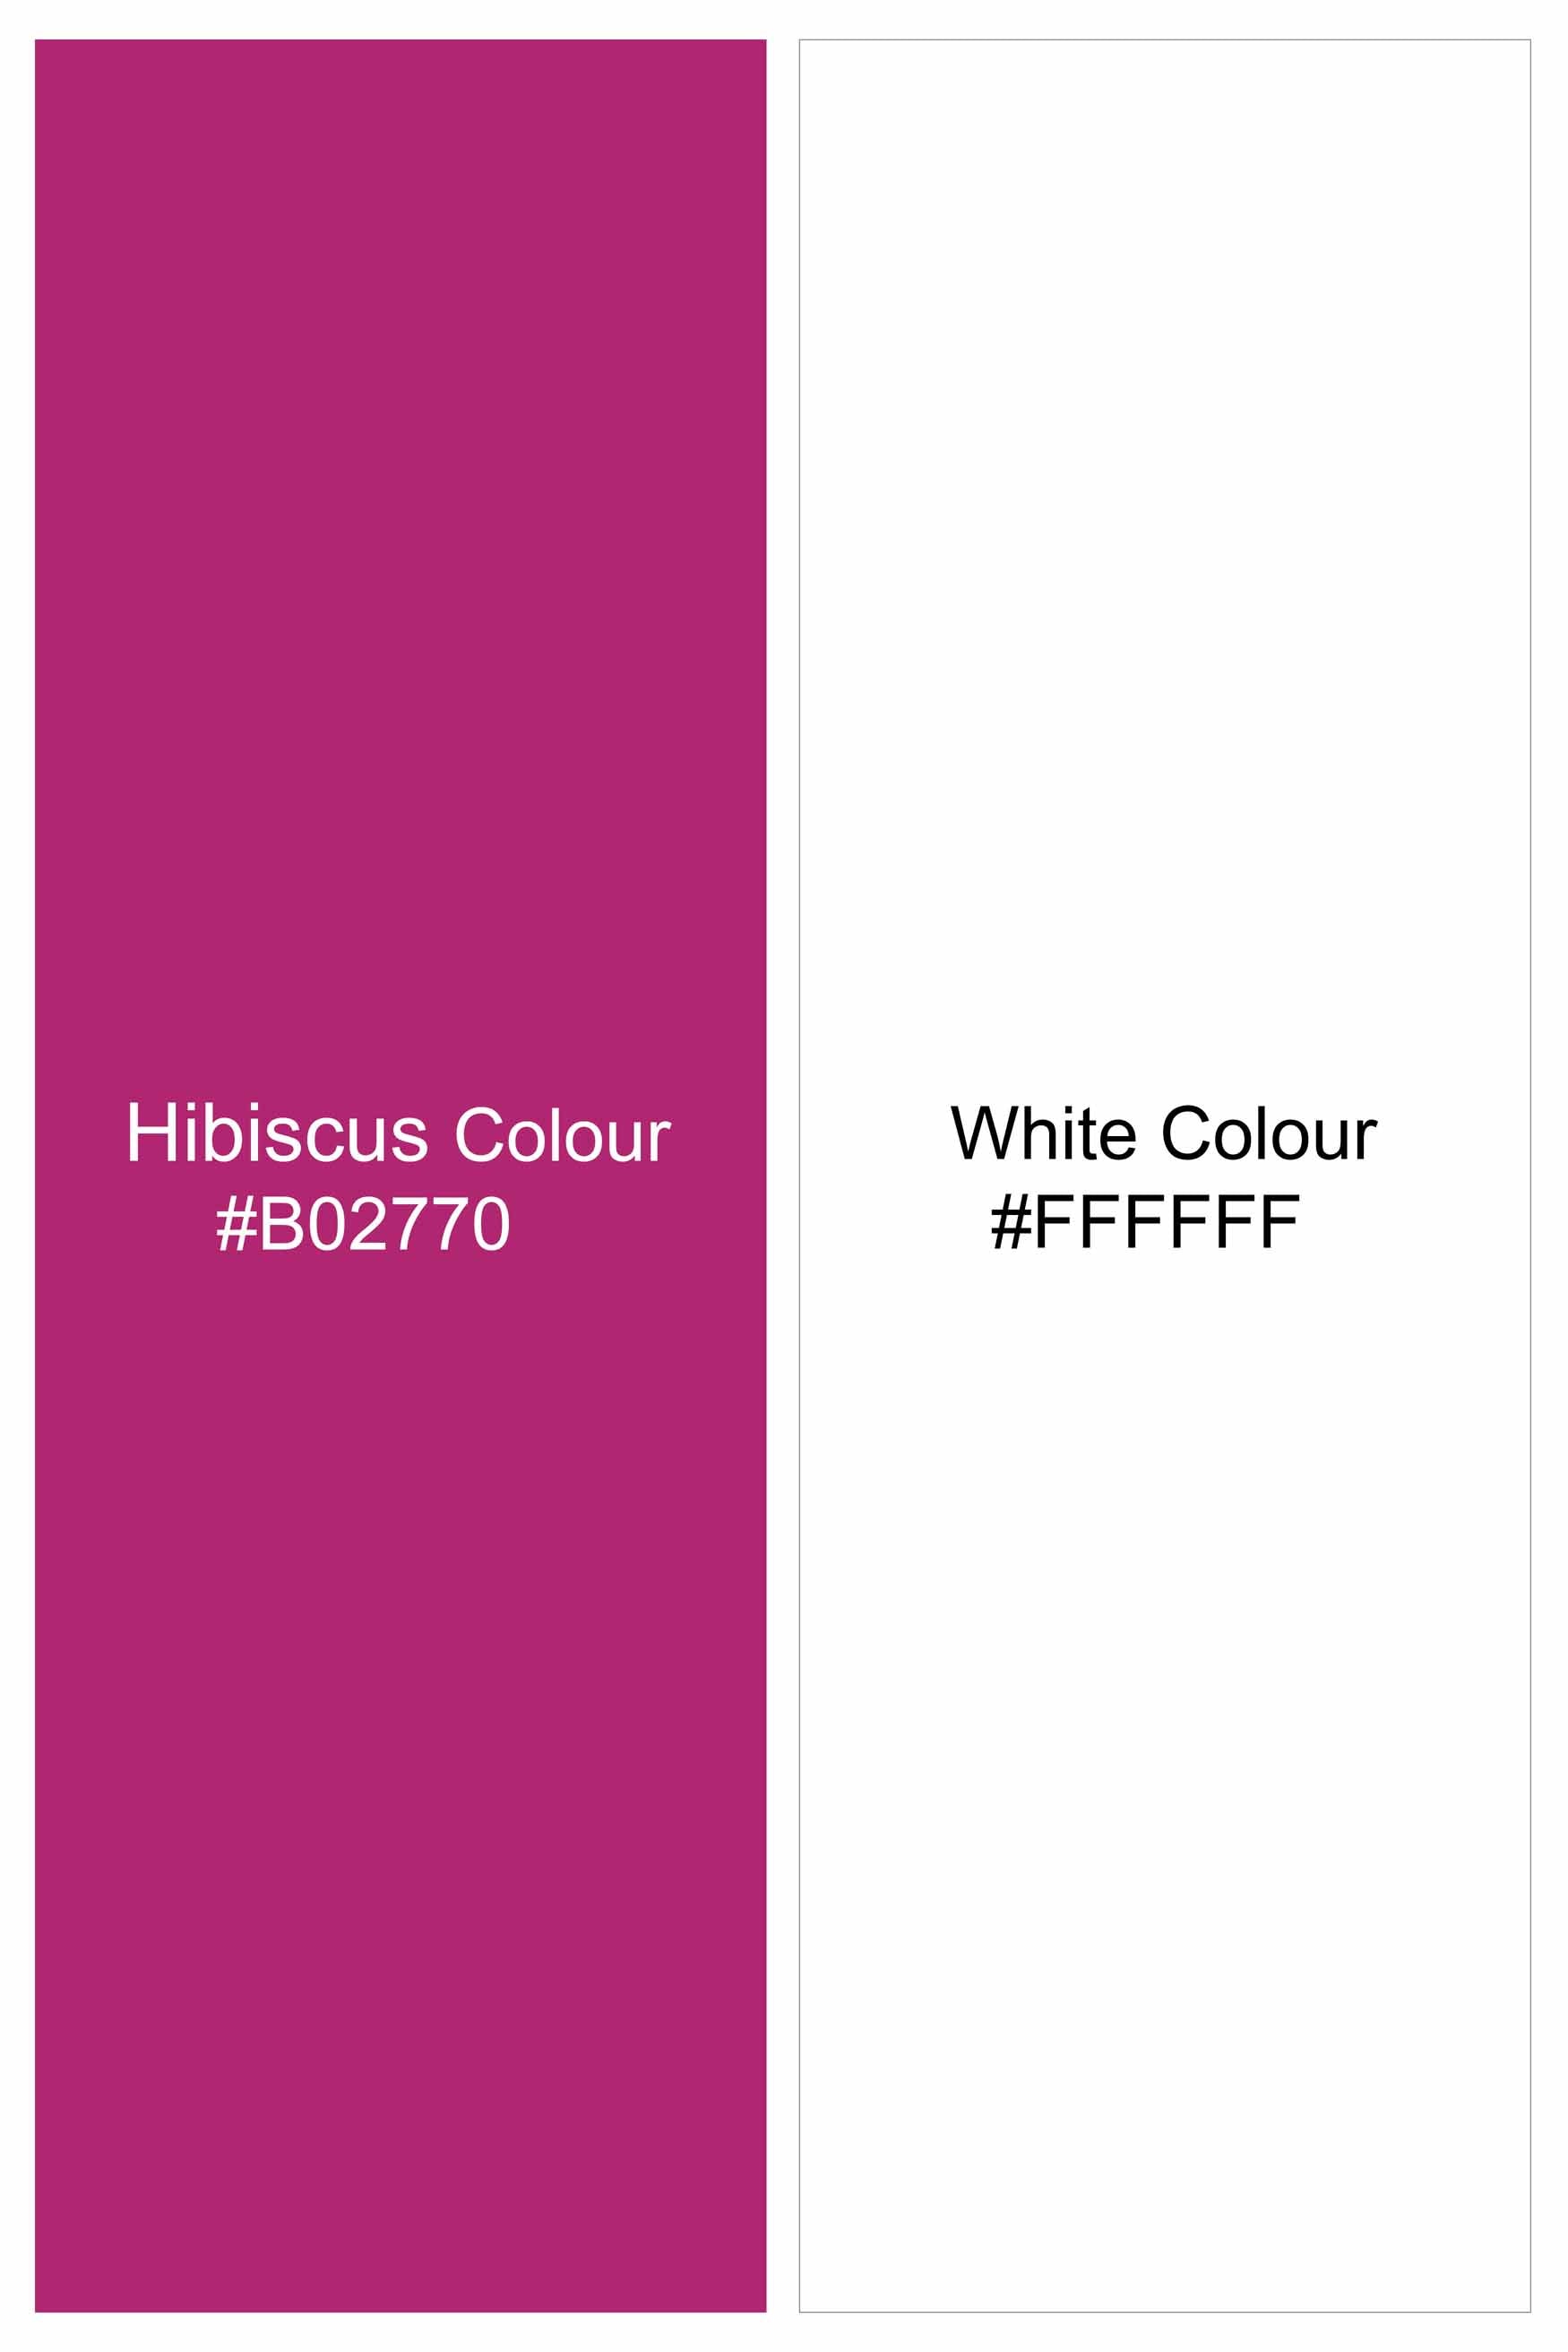 Hibiscus Pink and White Geometric Printed Premium Tencel Kurta Shirt